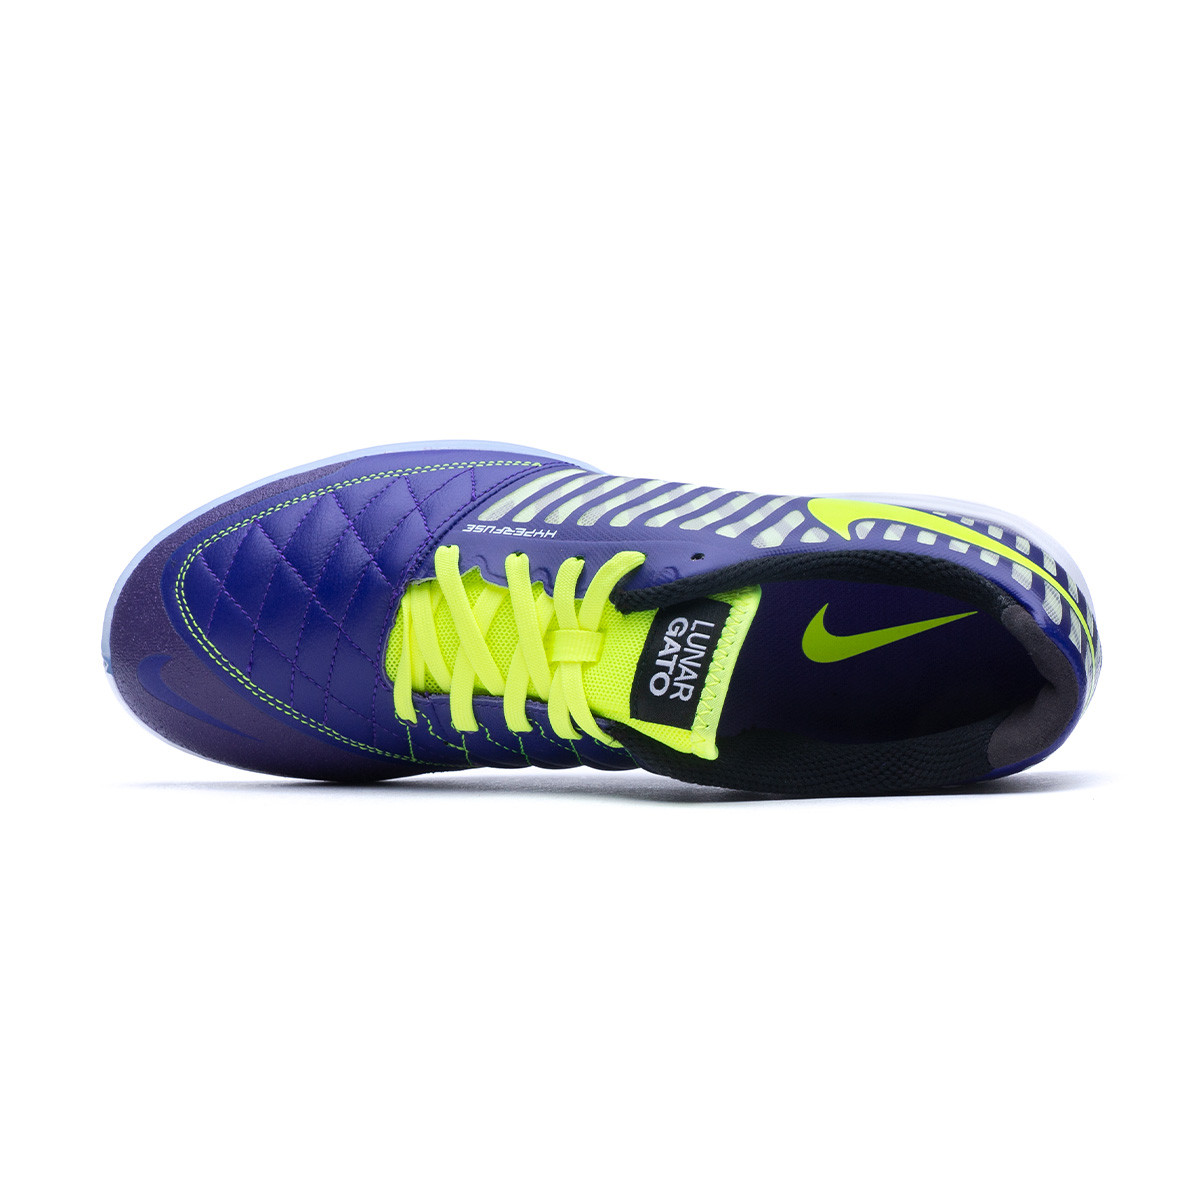 Iluminar extraño Disparo Zapatilla de Fútbol sala Nike Lunar Gato II Electro Purple-Volt-Black-White  - Fútbol Emotion